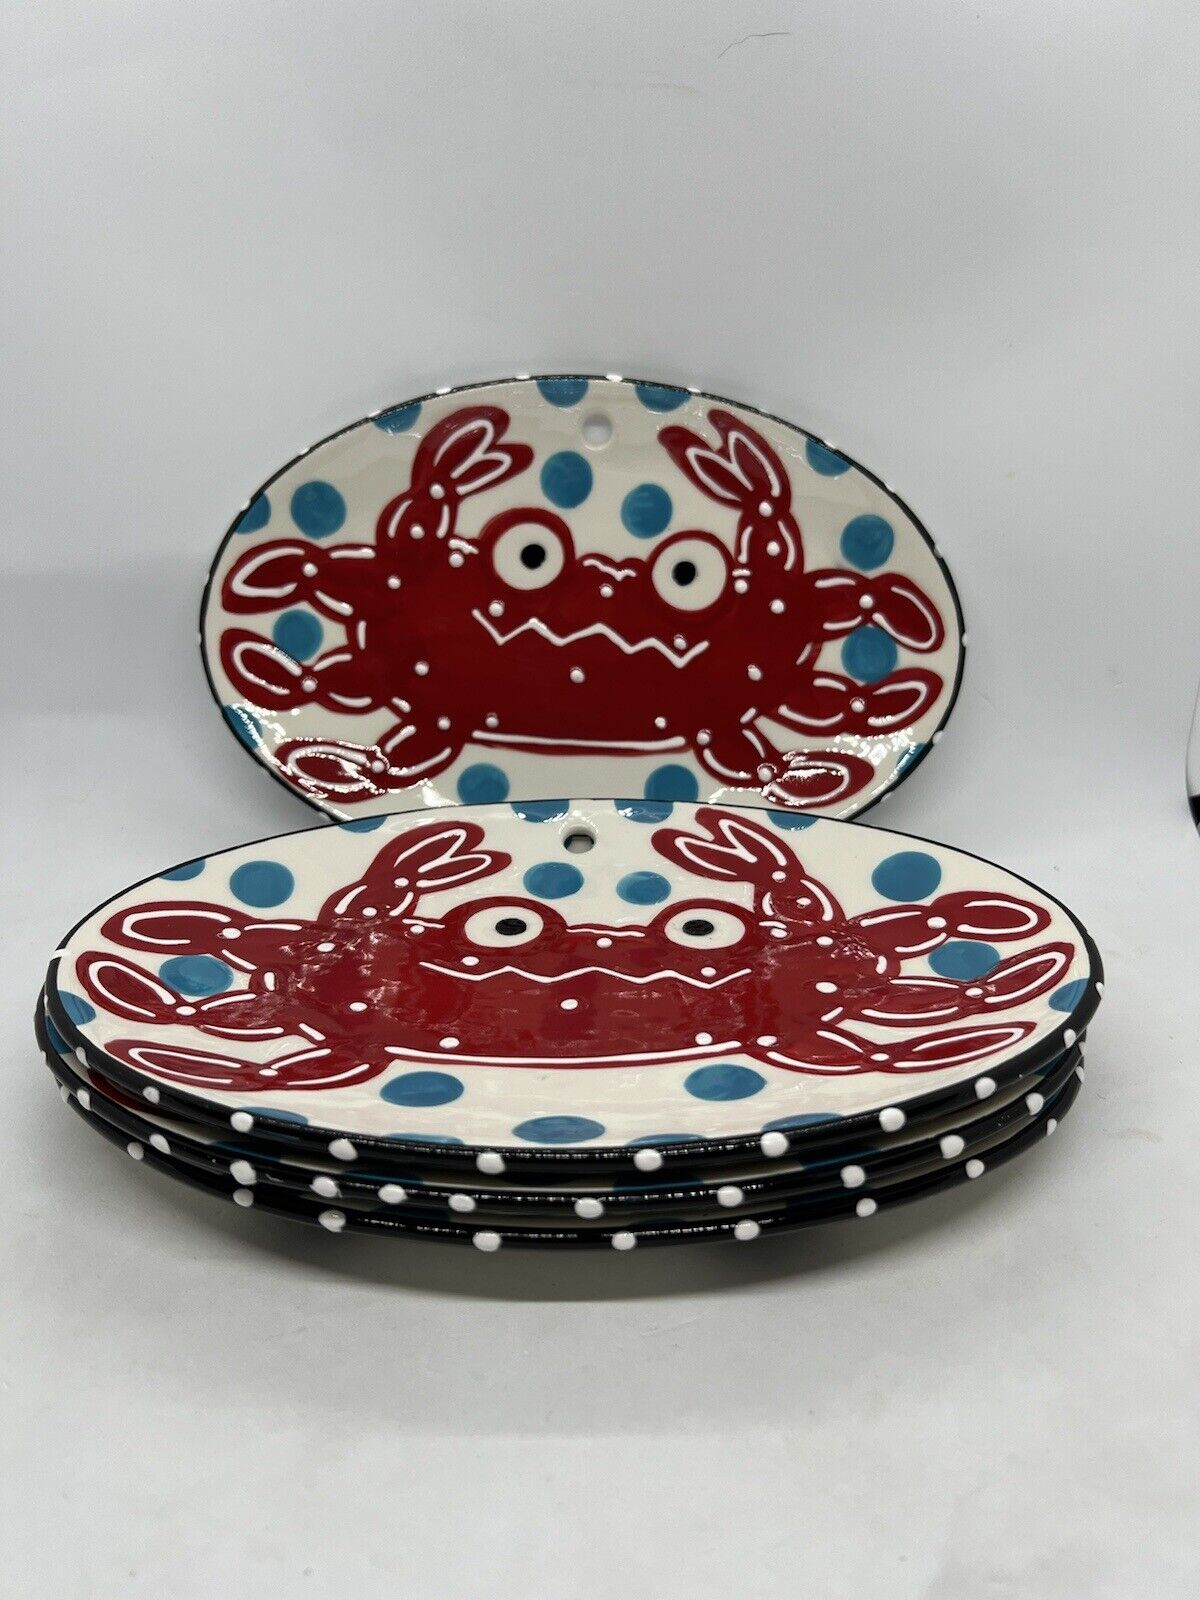 Clay Chick Ceramics Festive Red Crab & Polka Dot Plates NWOT Set of 4